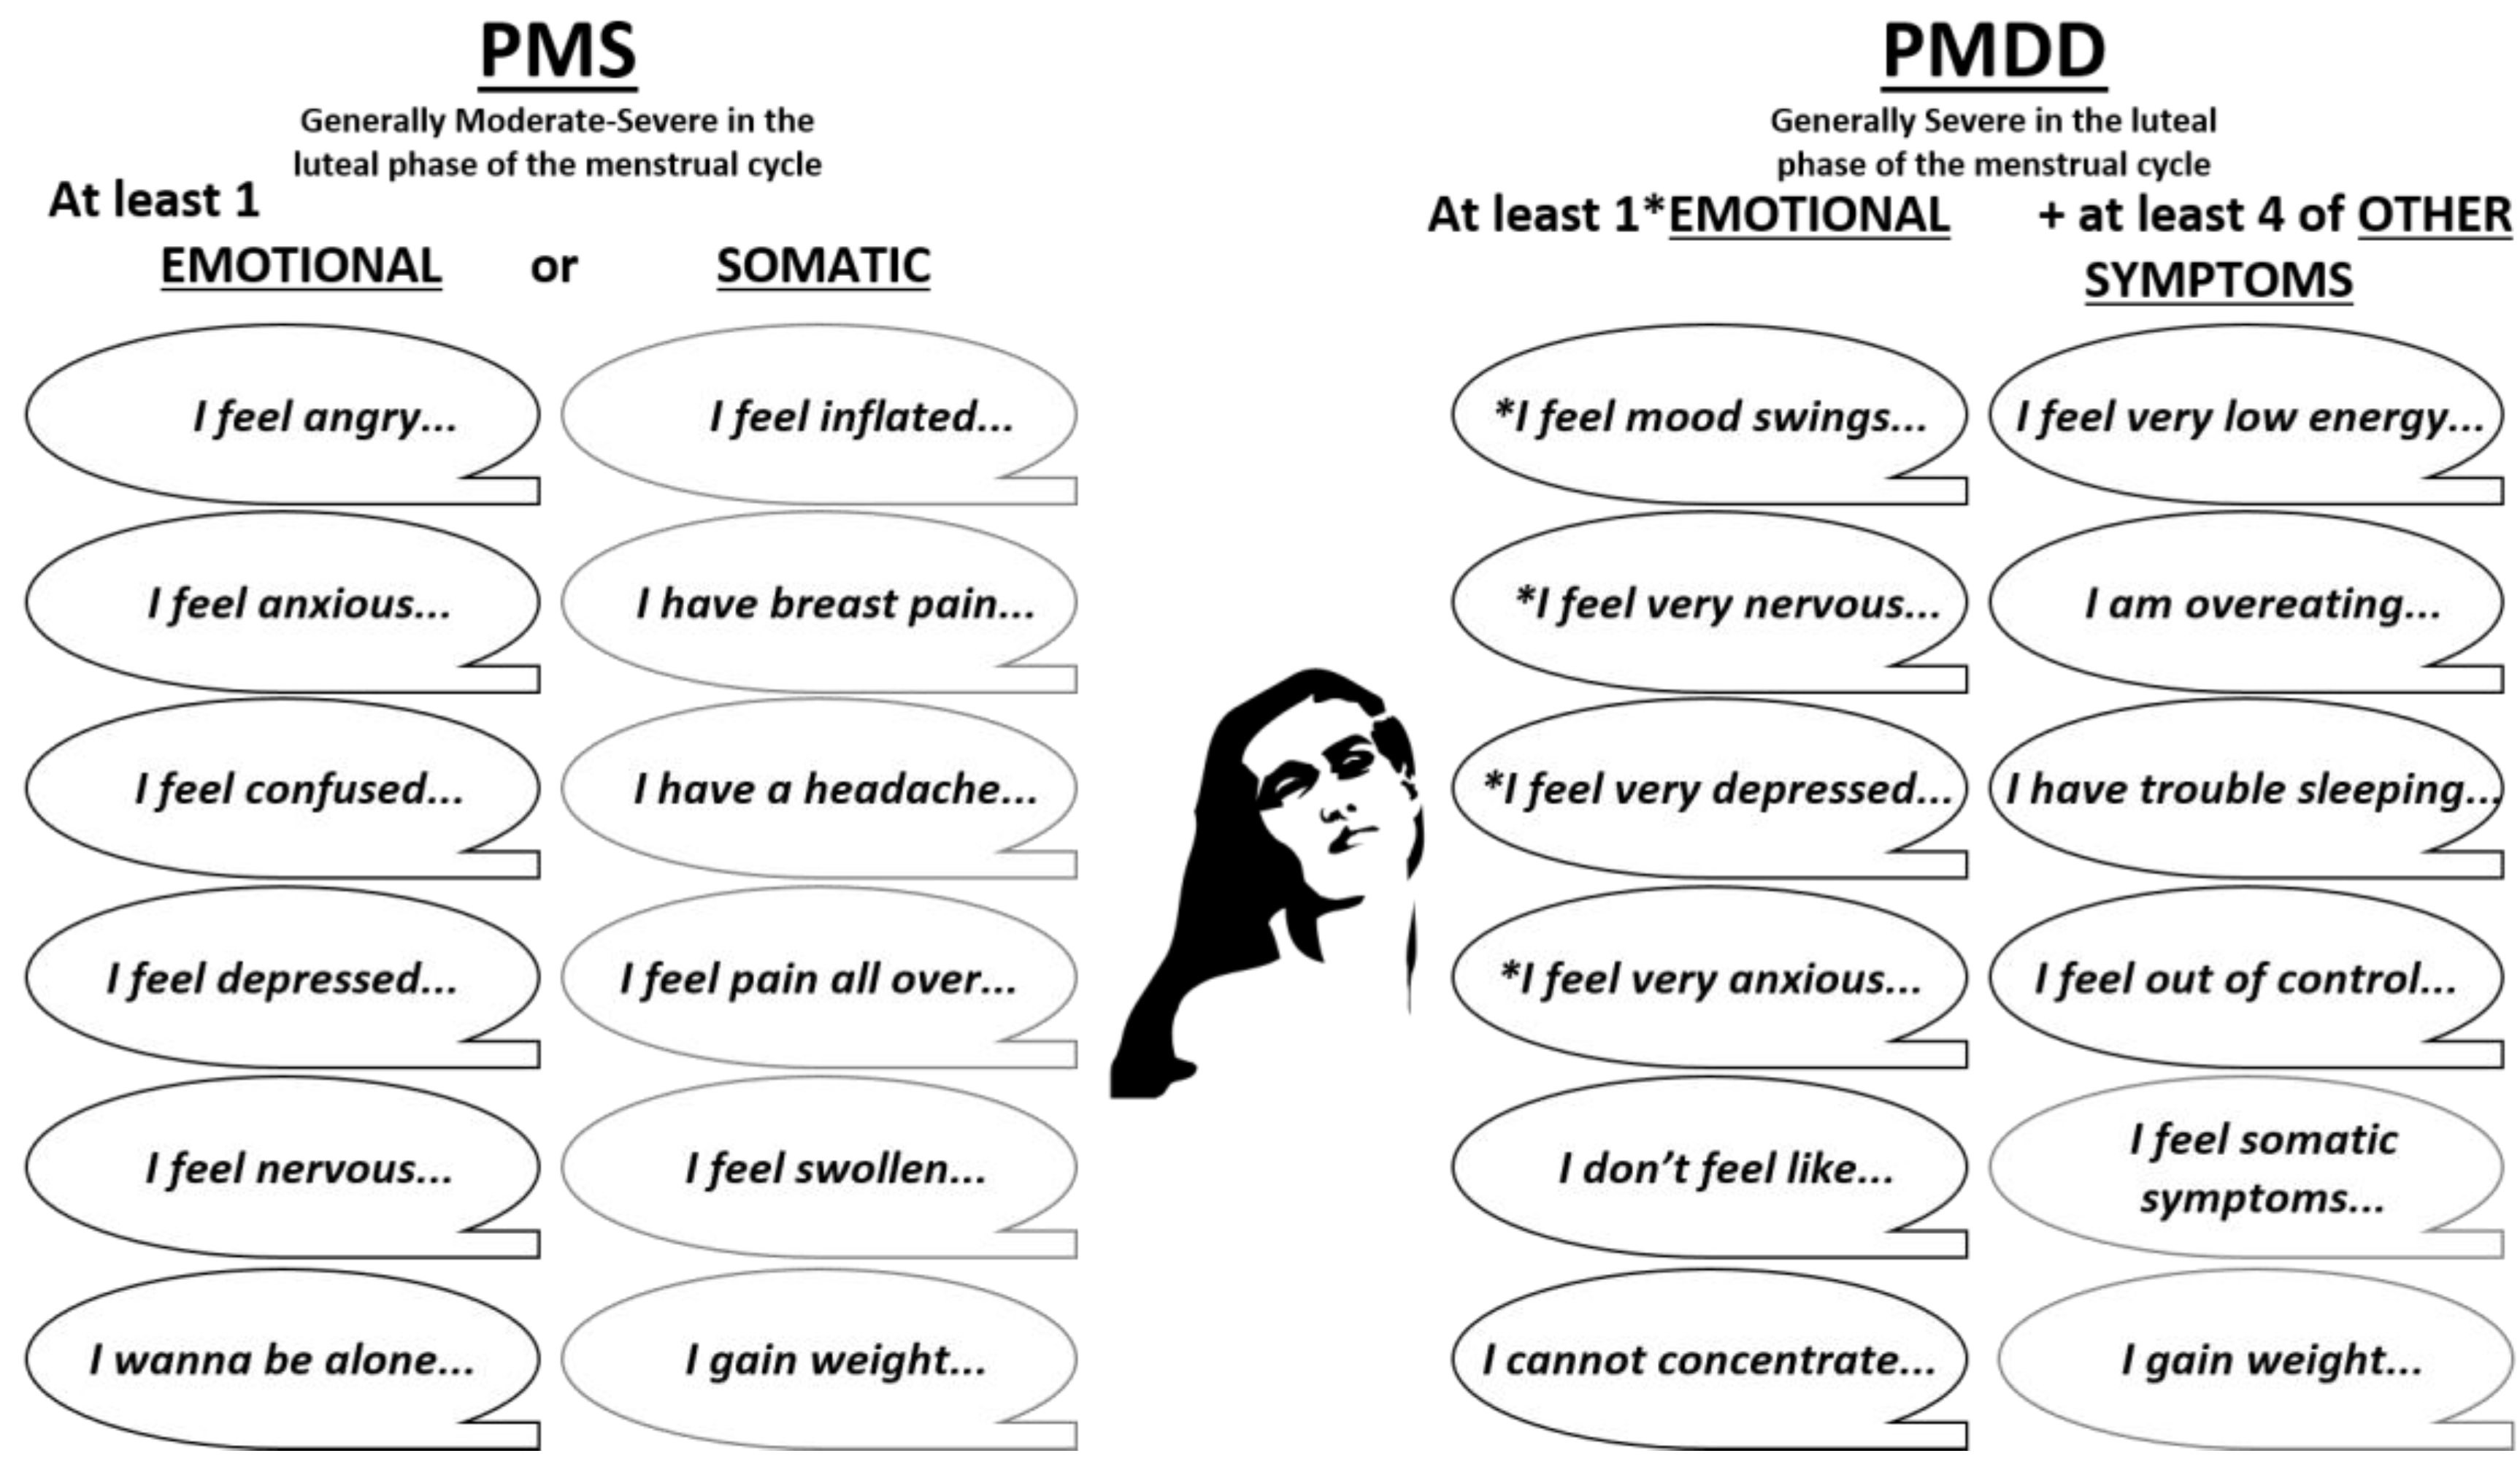 Emotion Dysregulation of Women with Premenstrual Syndrome